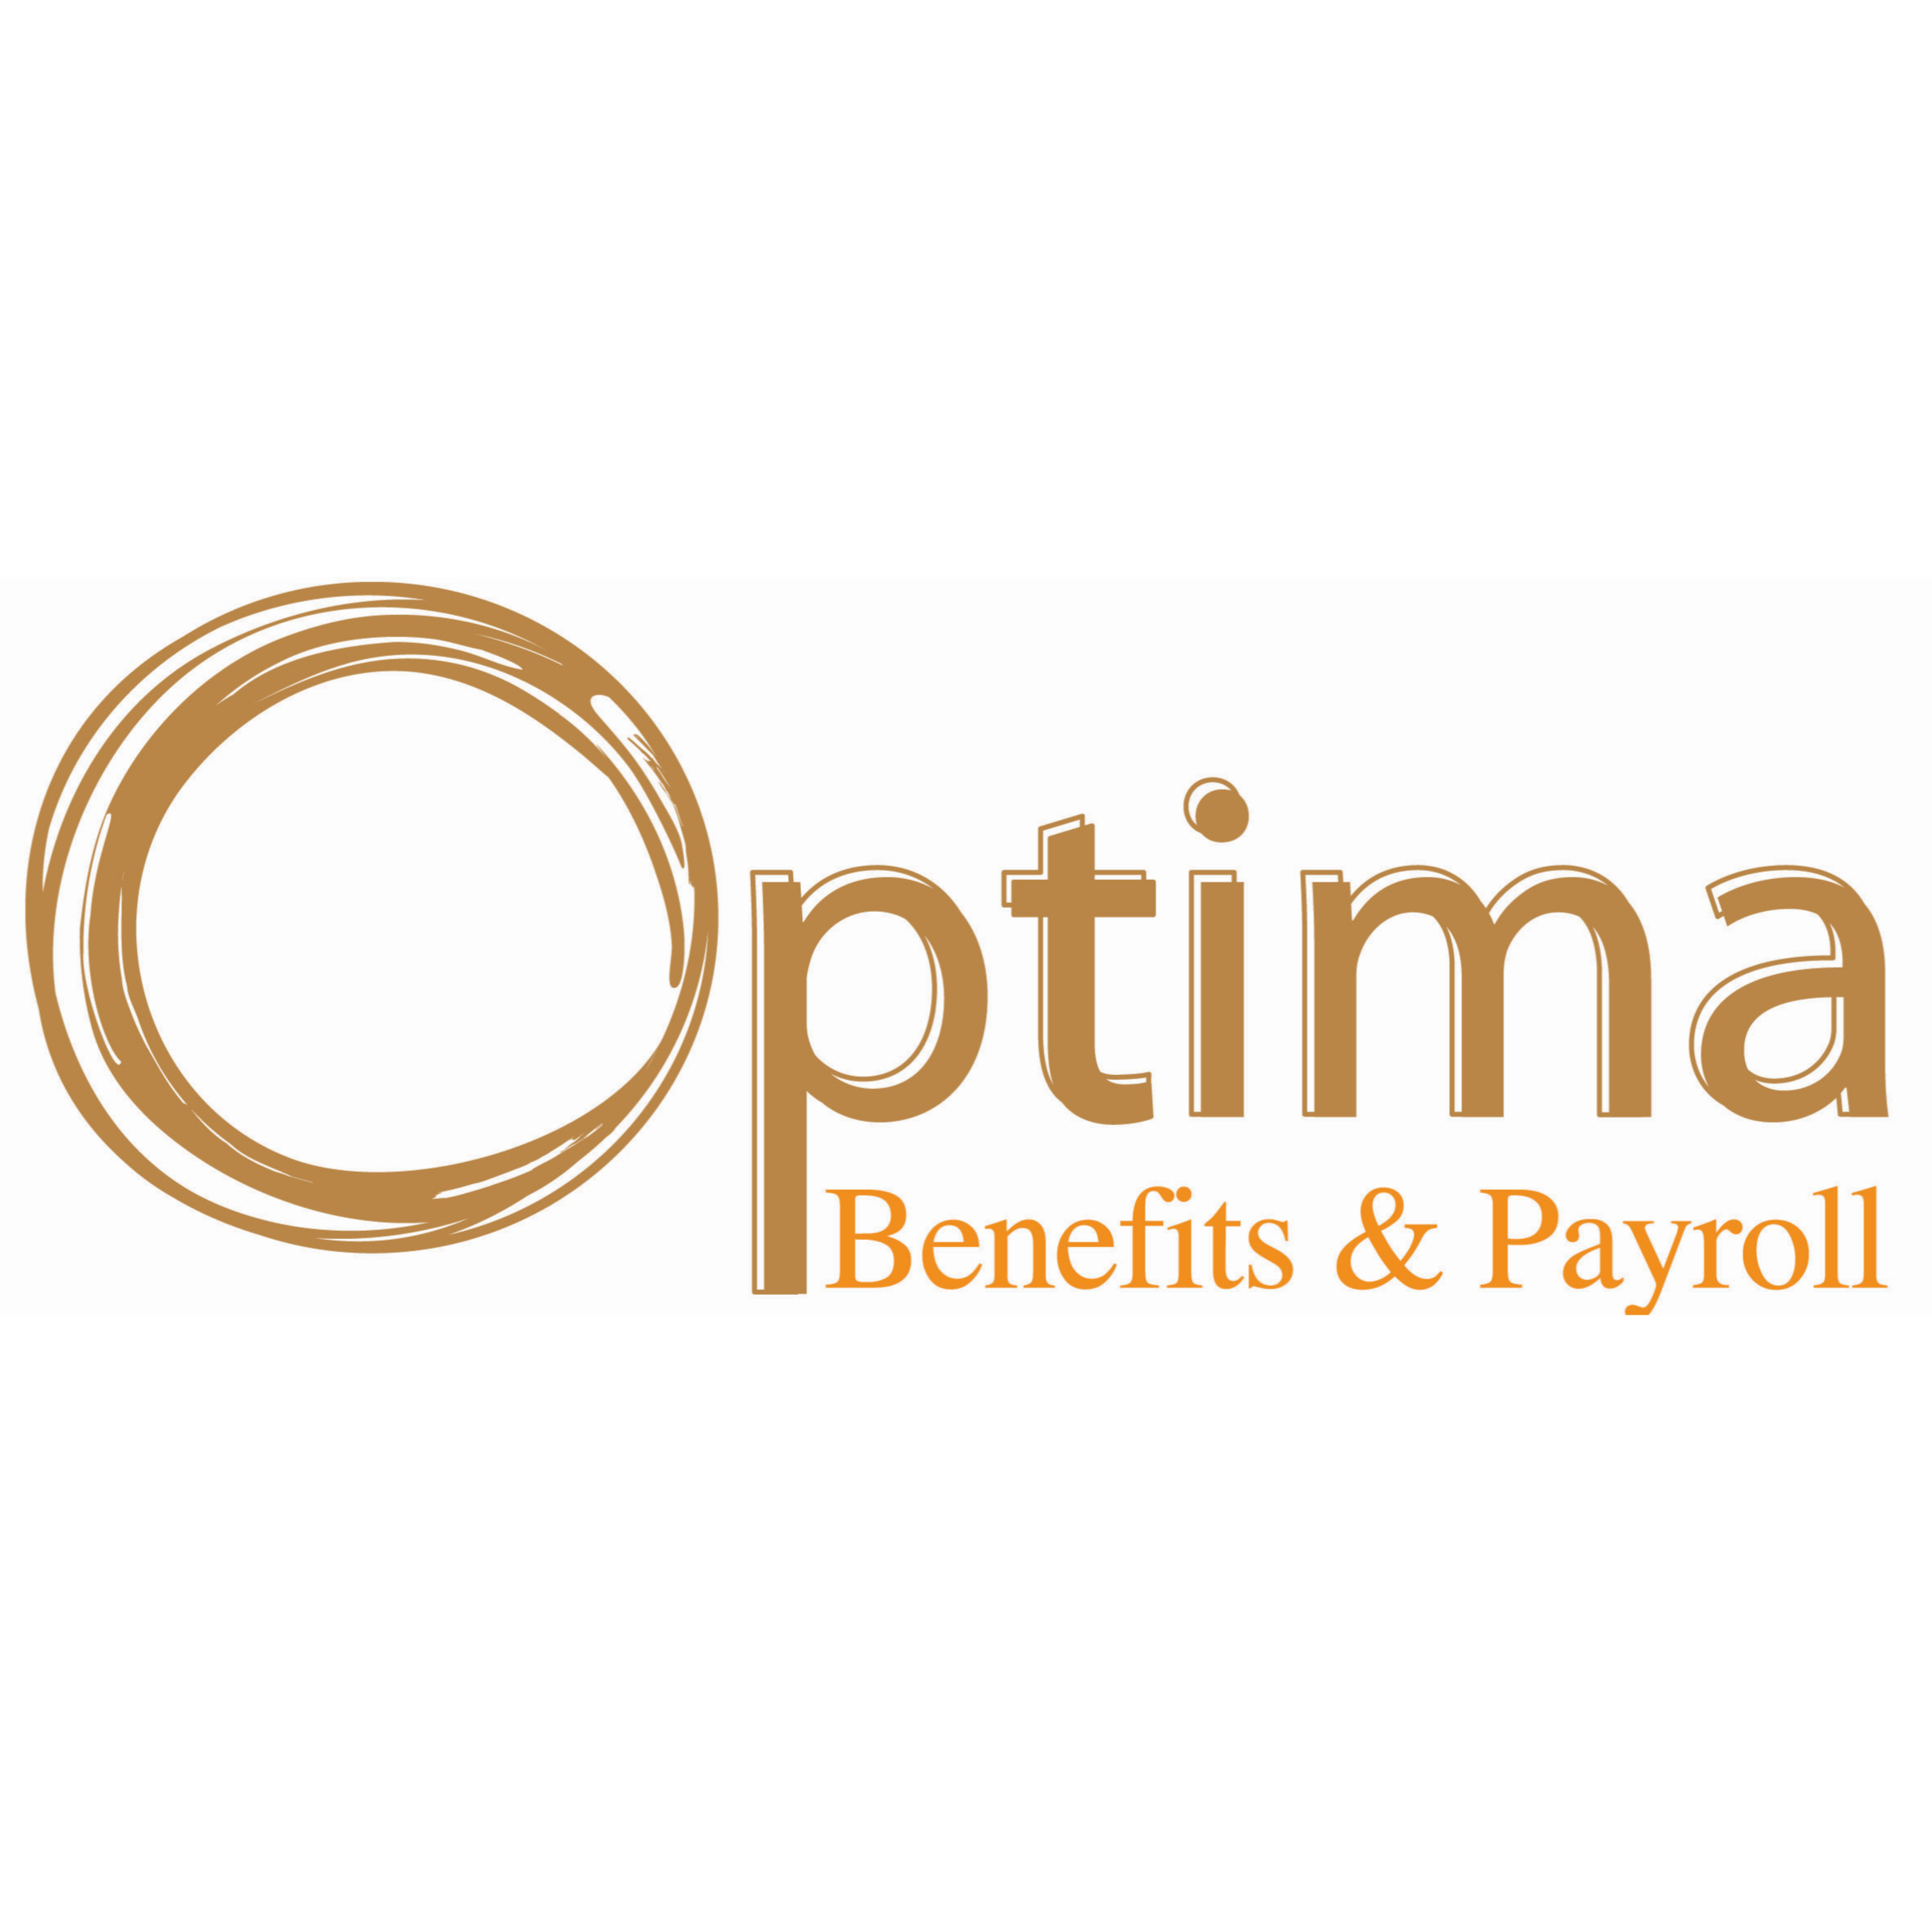 Optima Benefits & Payroll - Rochester, NY 14618 - (585)506-4000 | ShowMeLocal.com